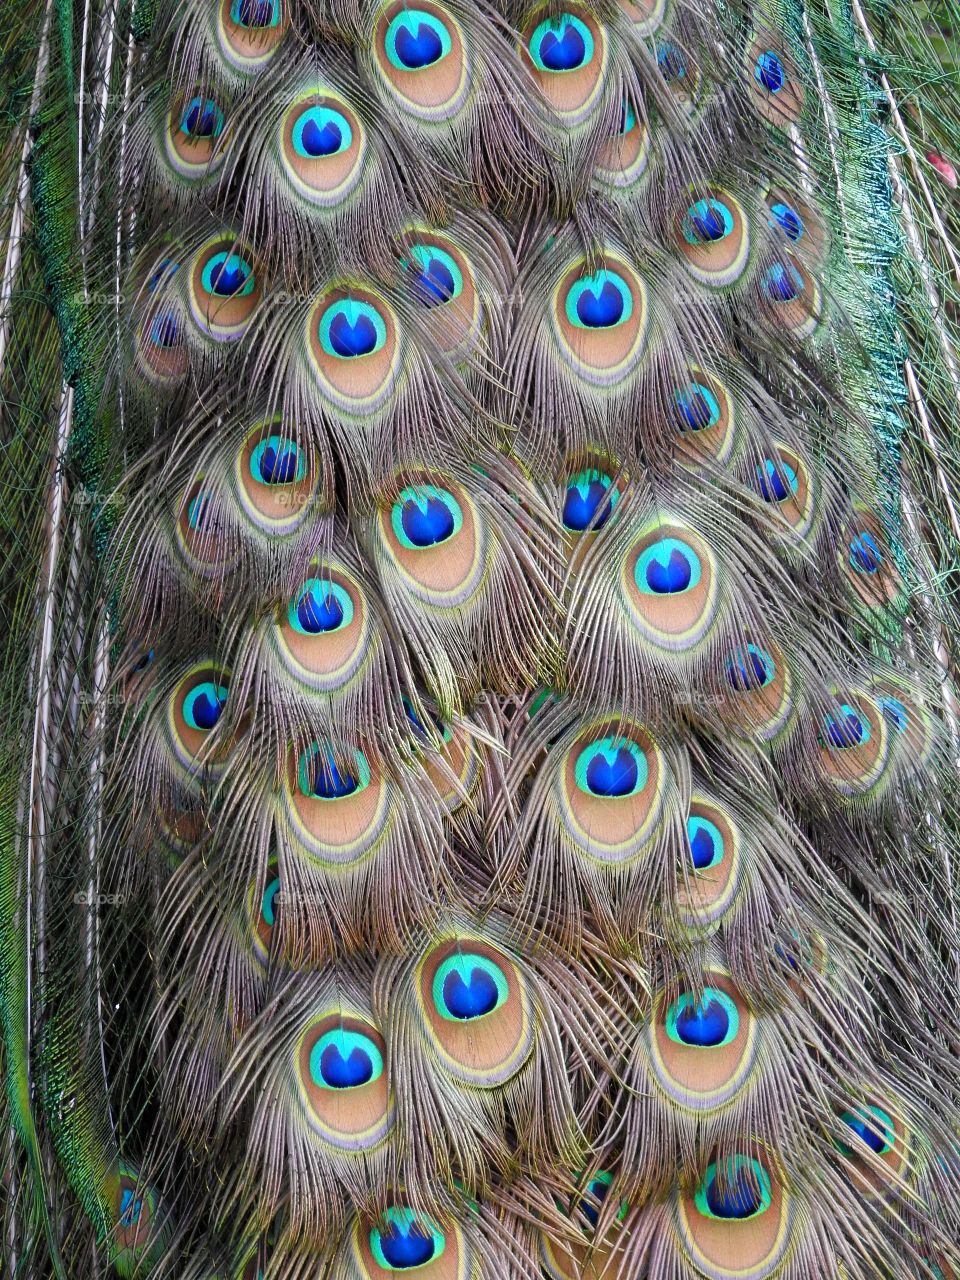 Peacock Close-up